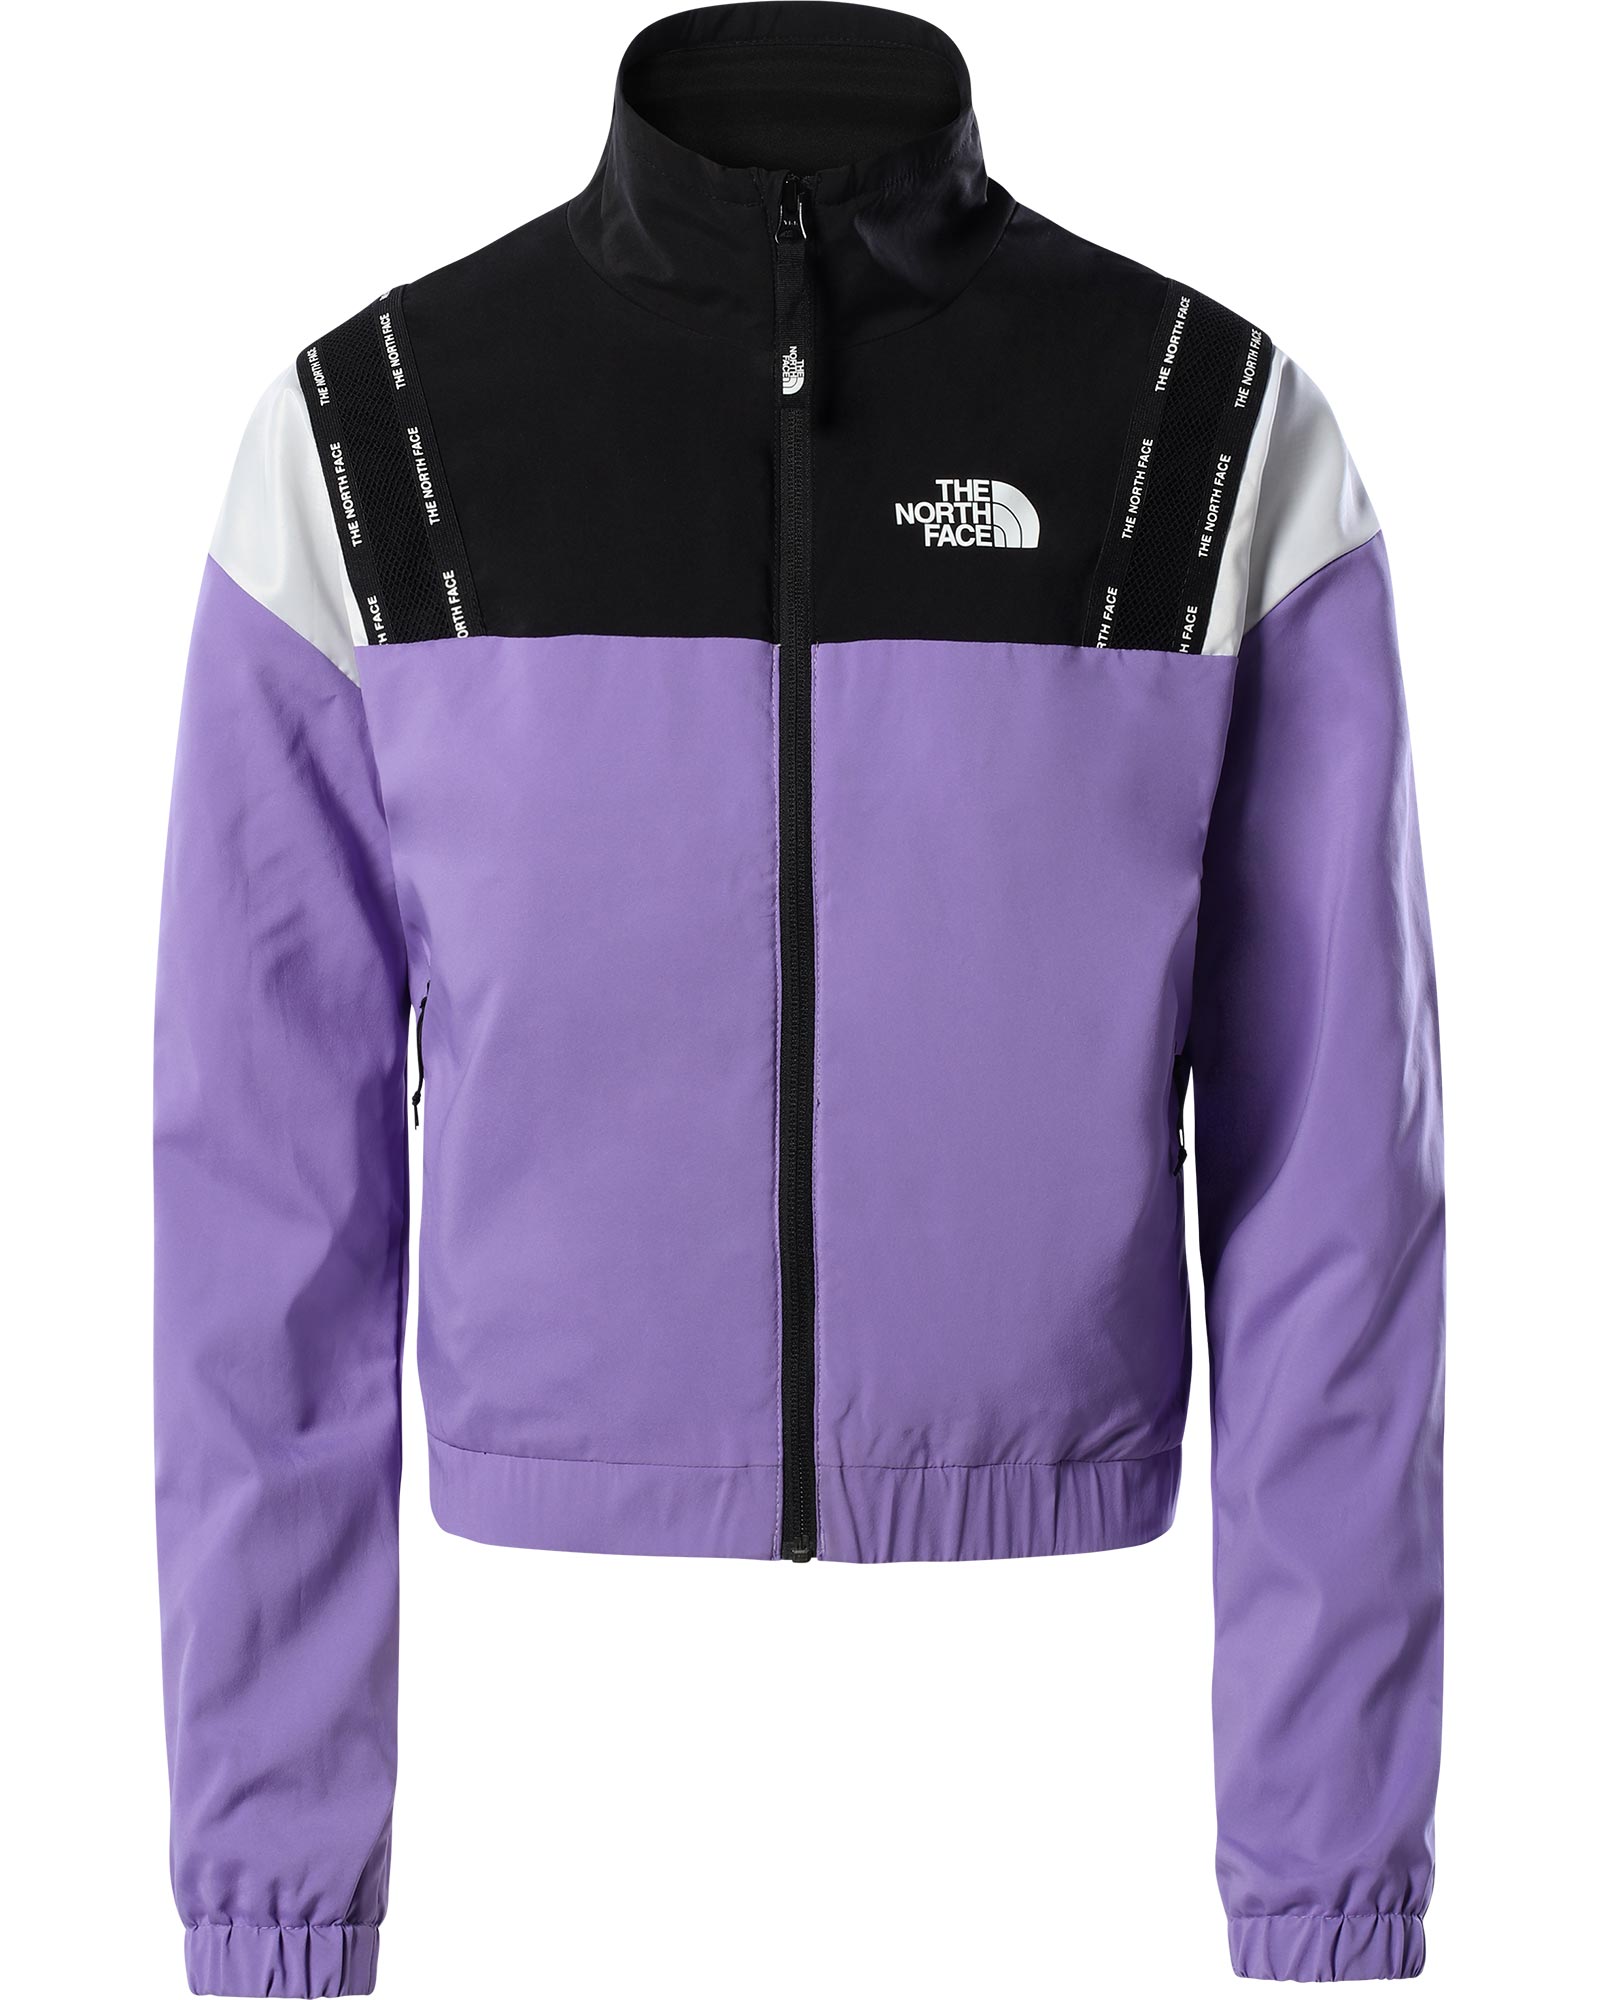 The North Face MA Wind Women’s Jacket - Pop Purple XS